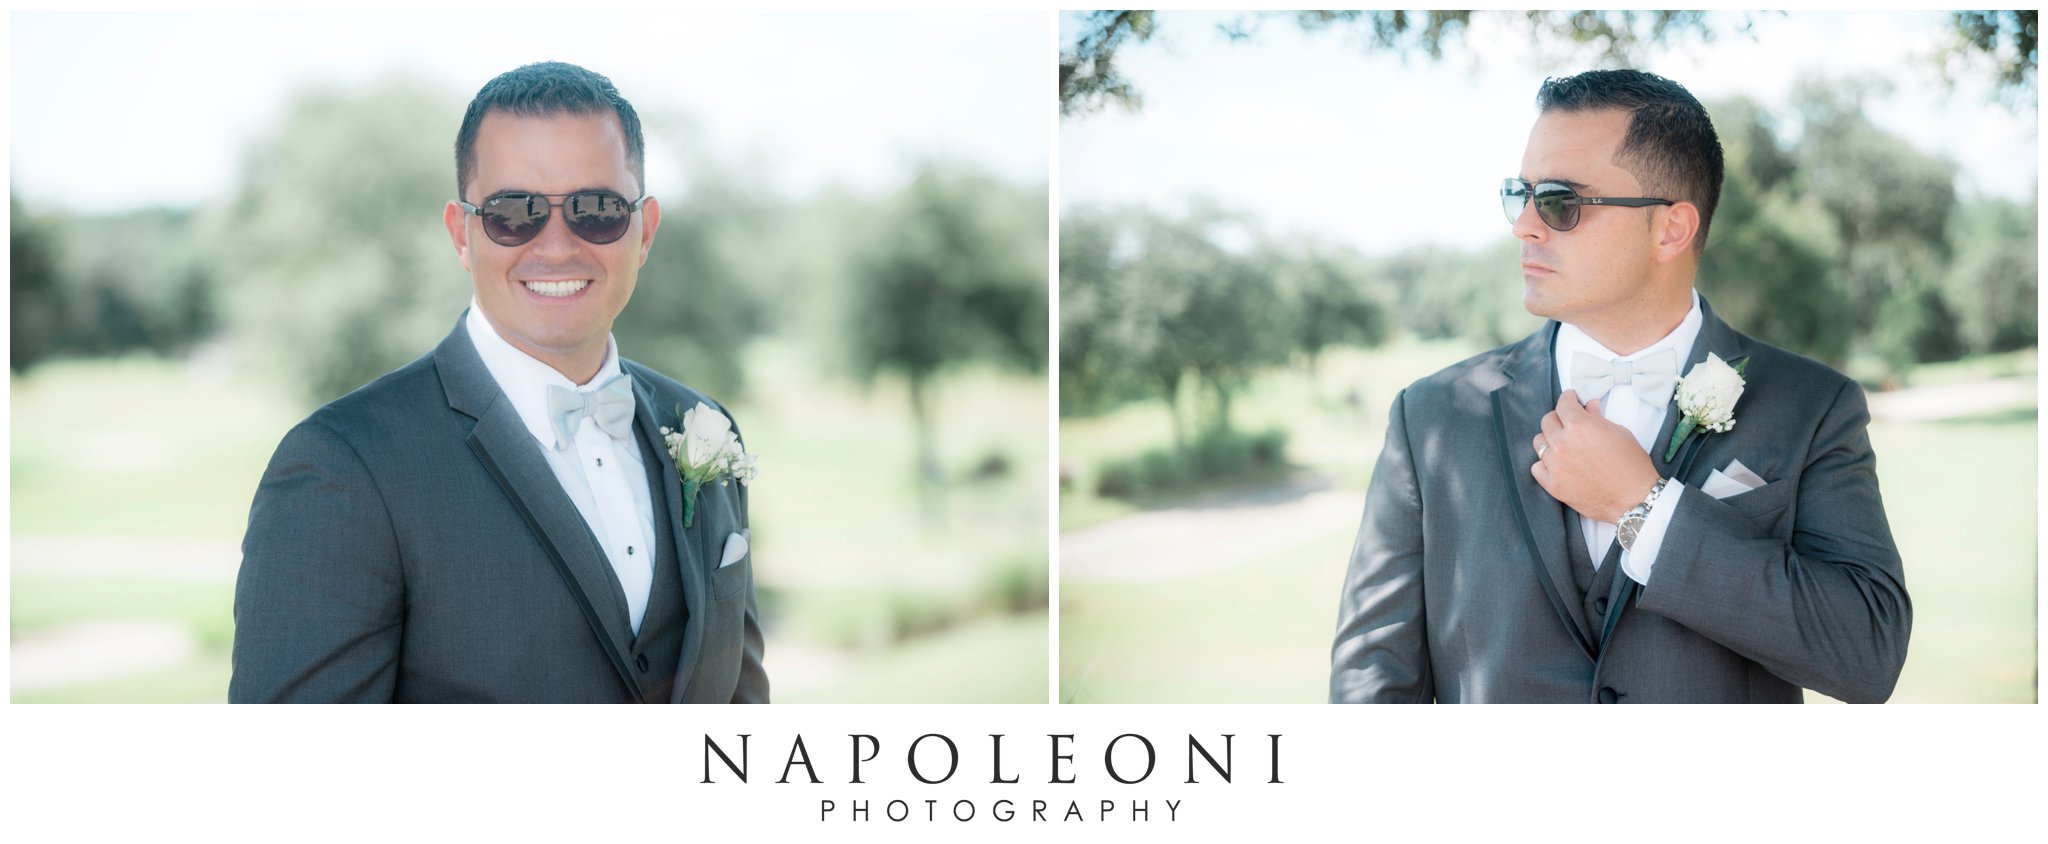 Napoleoni Photography_0046